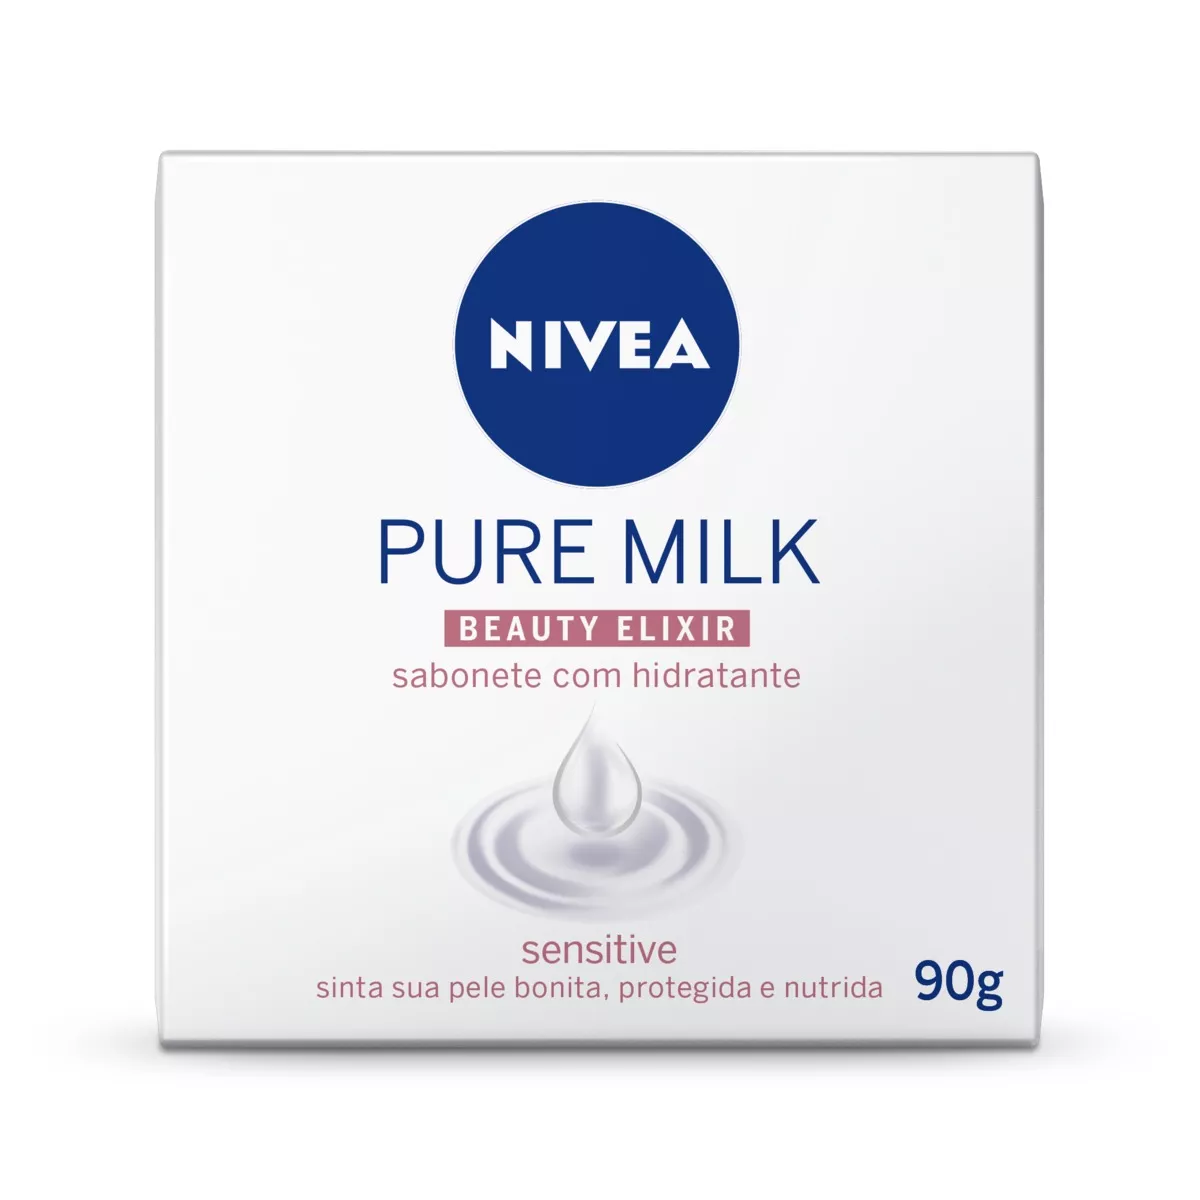 Sabão Em Barra Nivea Hidratante Sensitive Pure Milk Beauty Elixir De 90 G